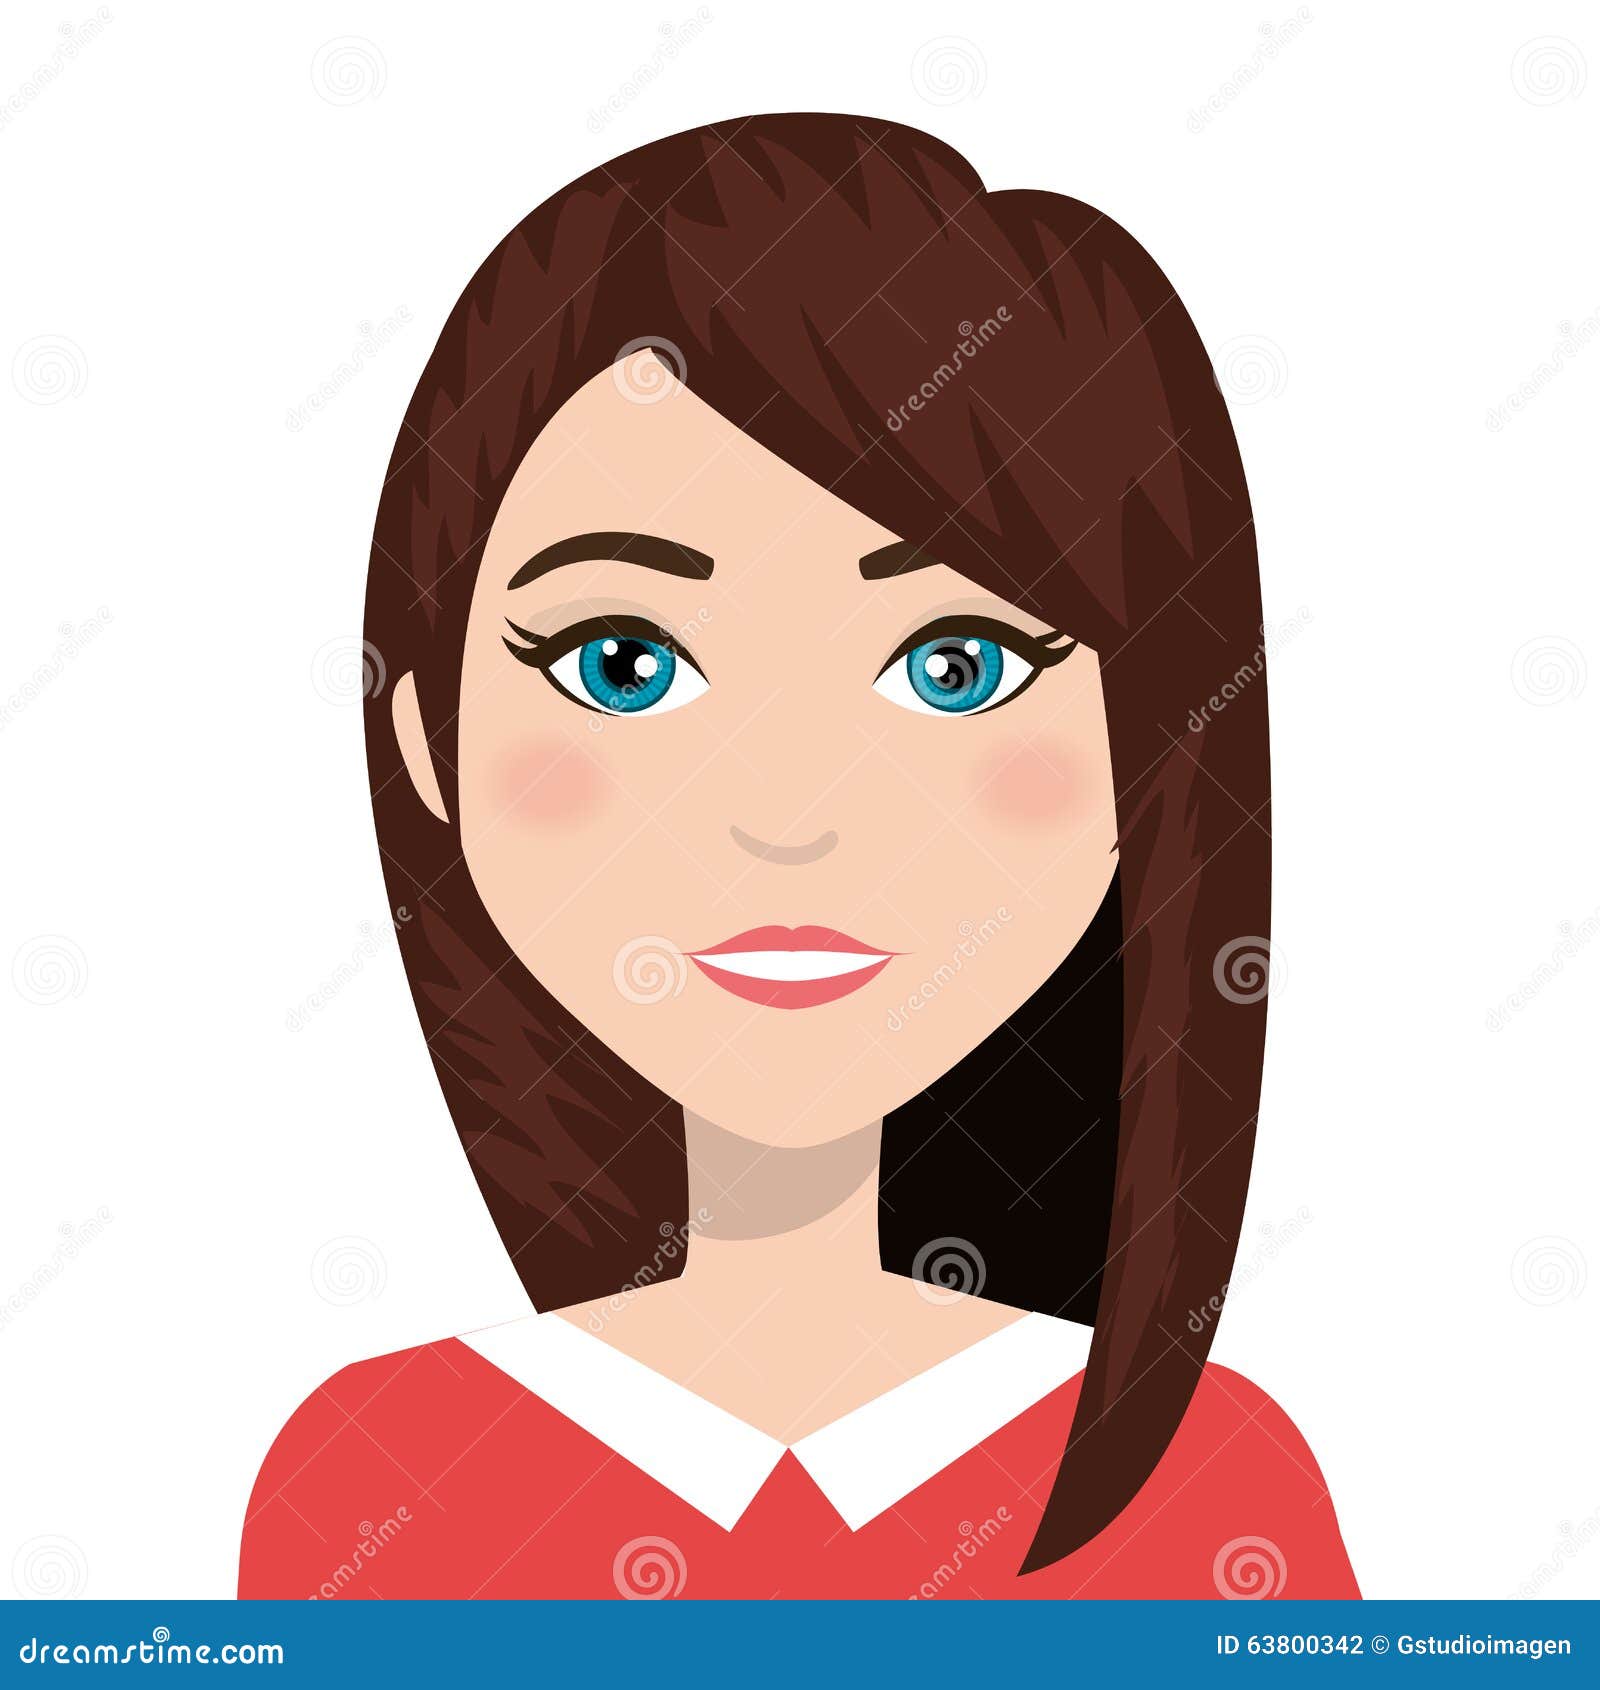 Premium Vector  Woman profile cartoon